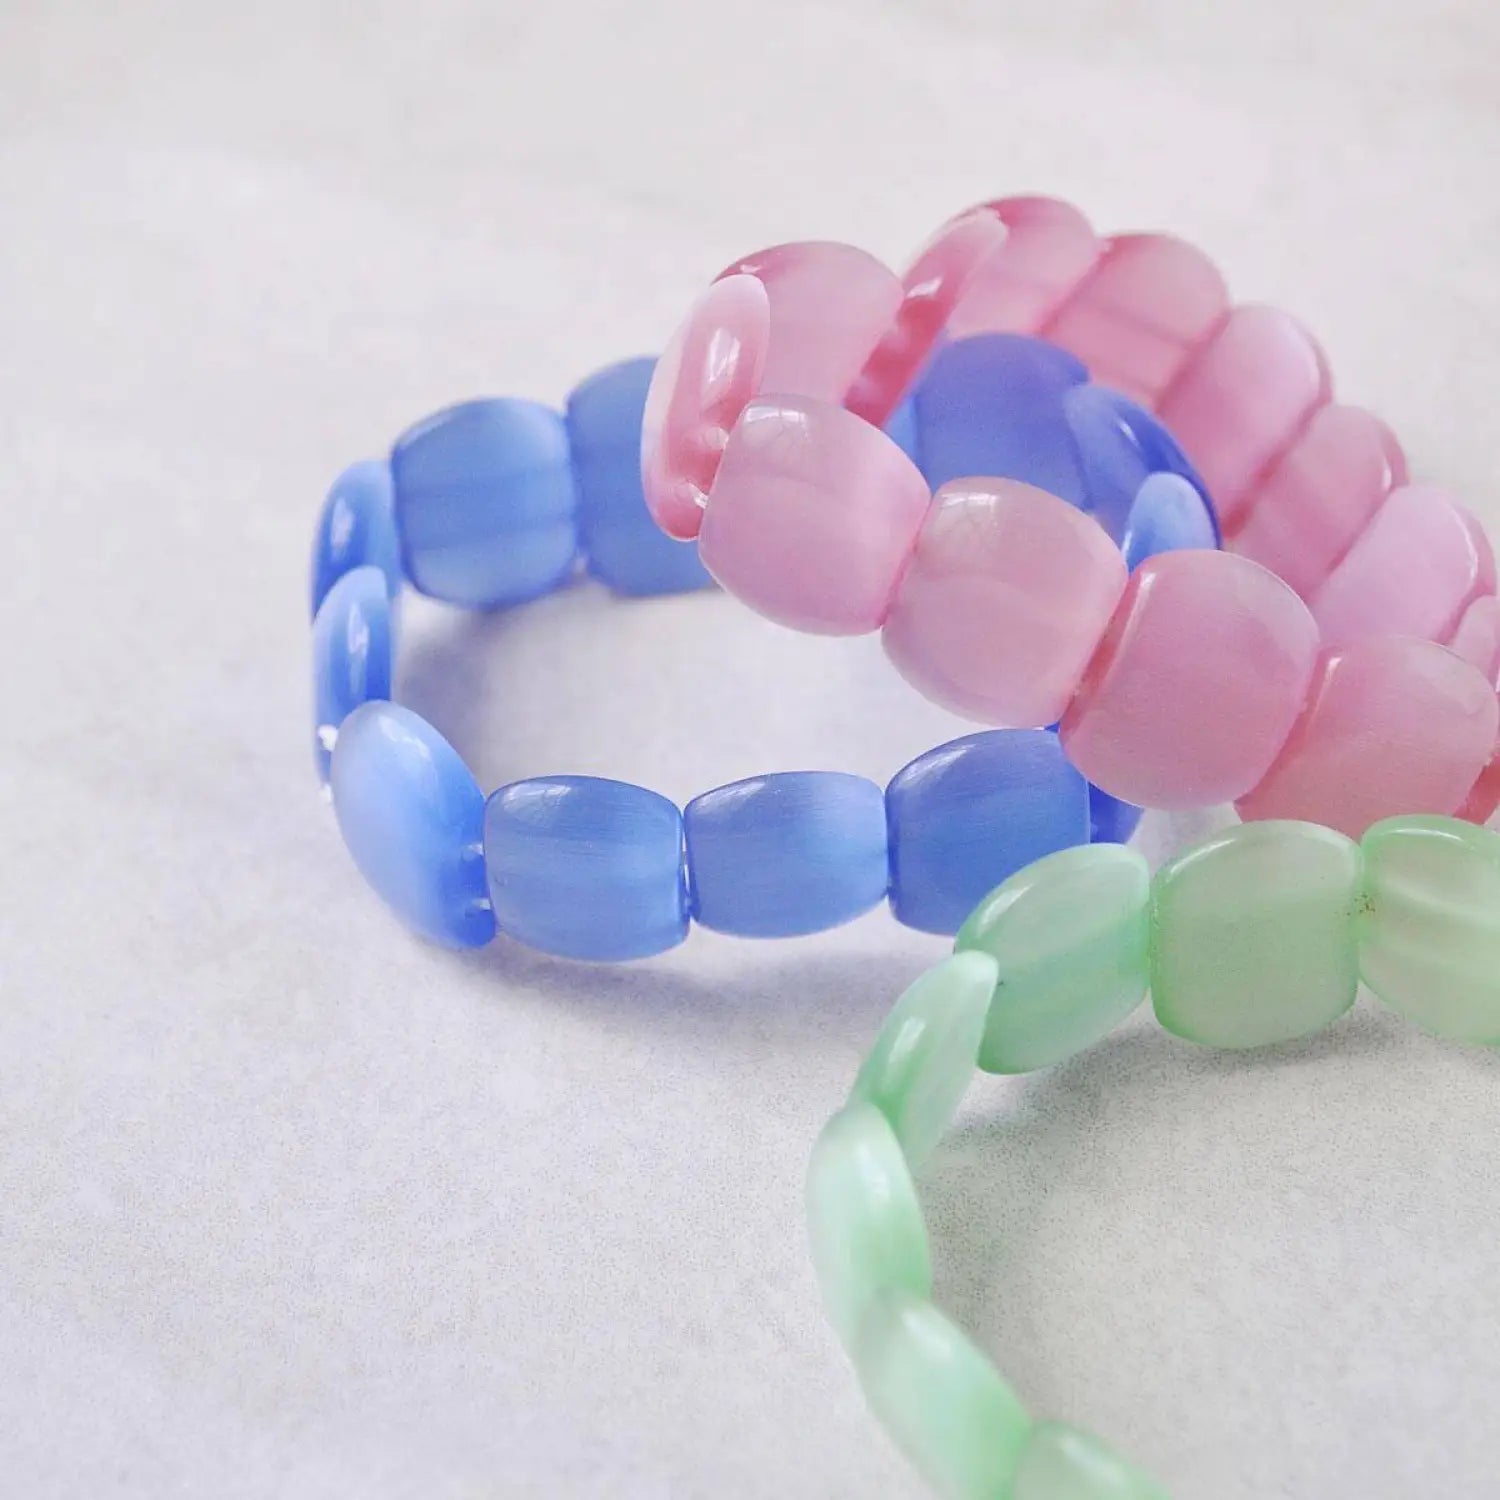 Pastel plastic bead bracelets on white surface